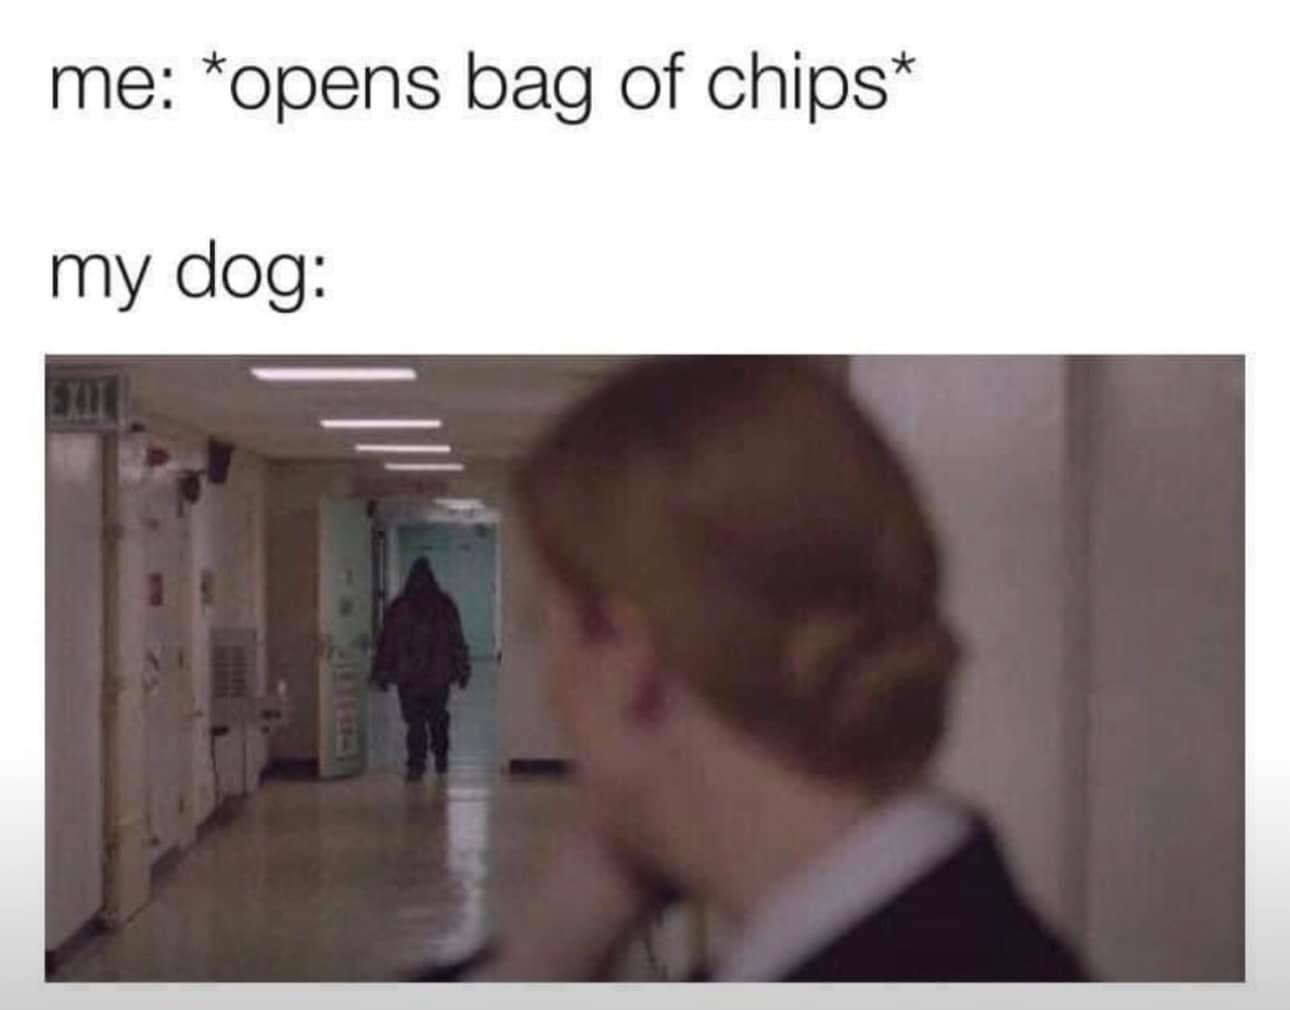 monday morning randomness - presentation - me opens bag of chips my dog Exit